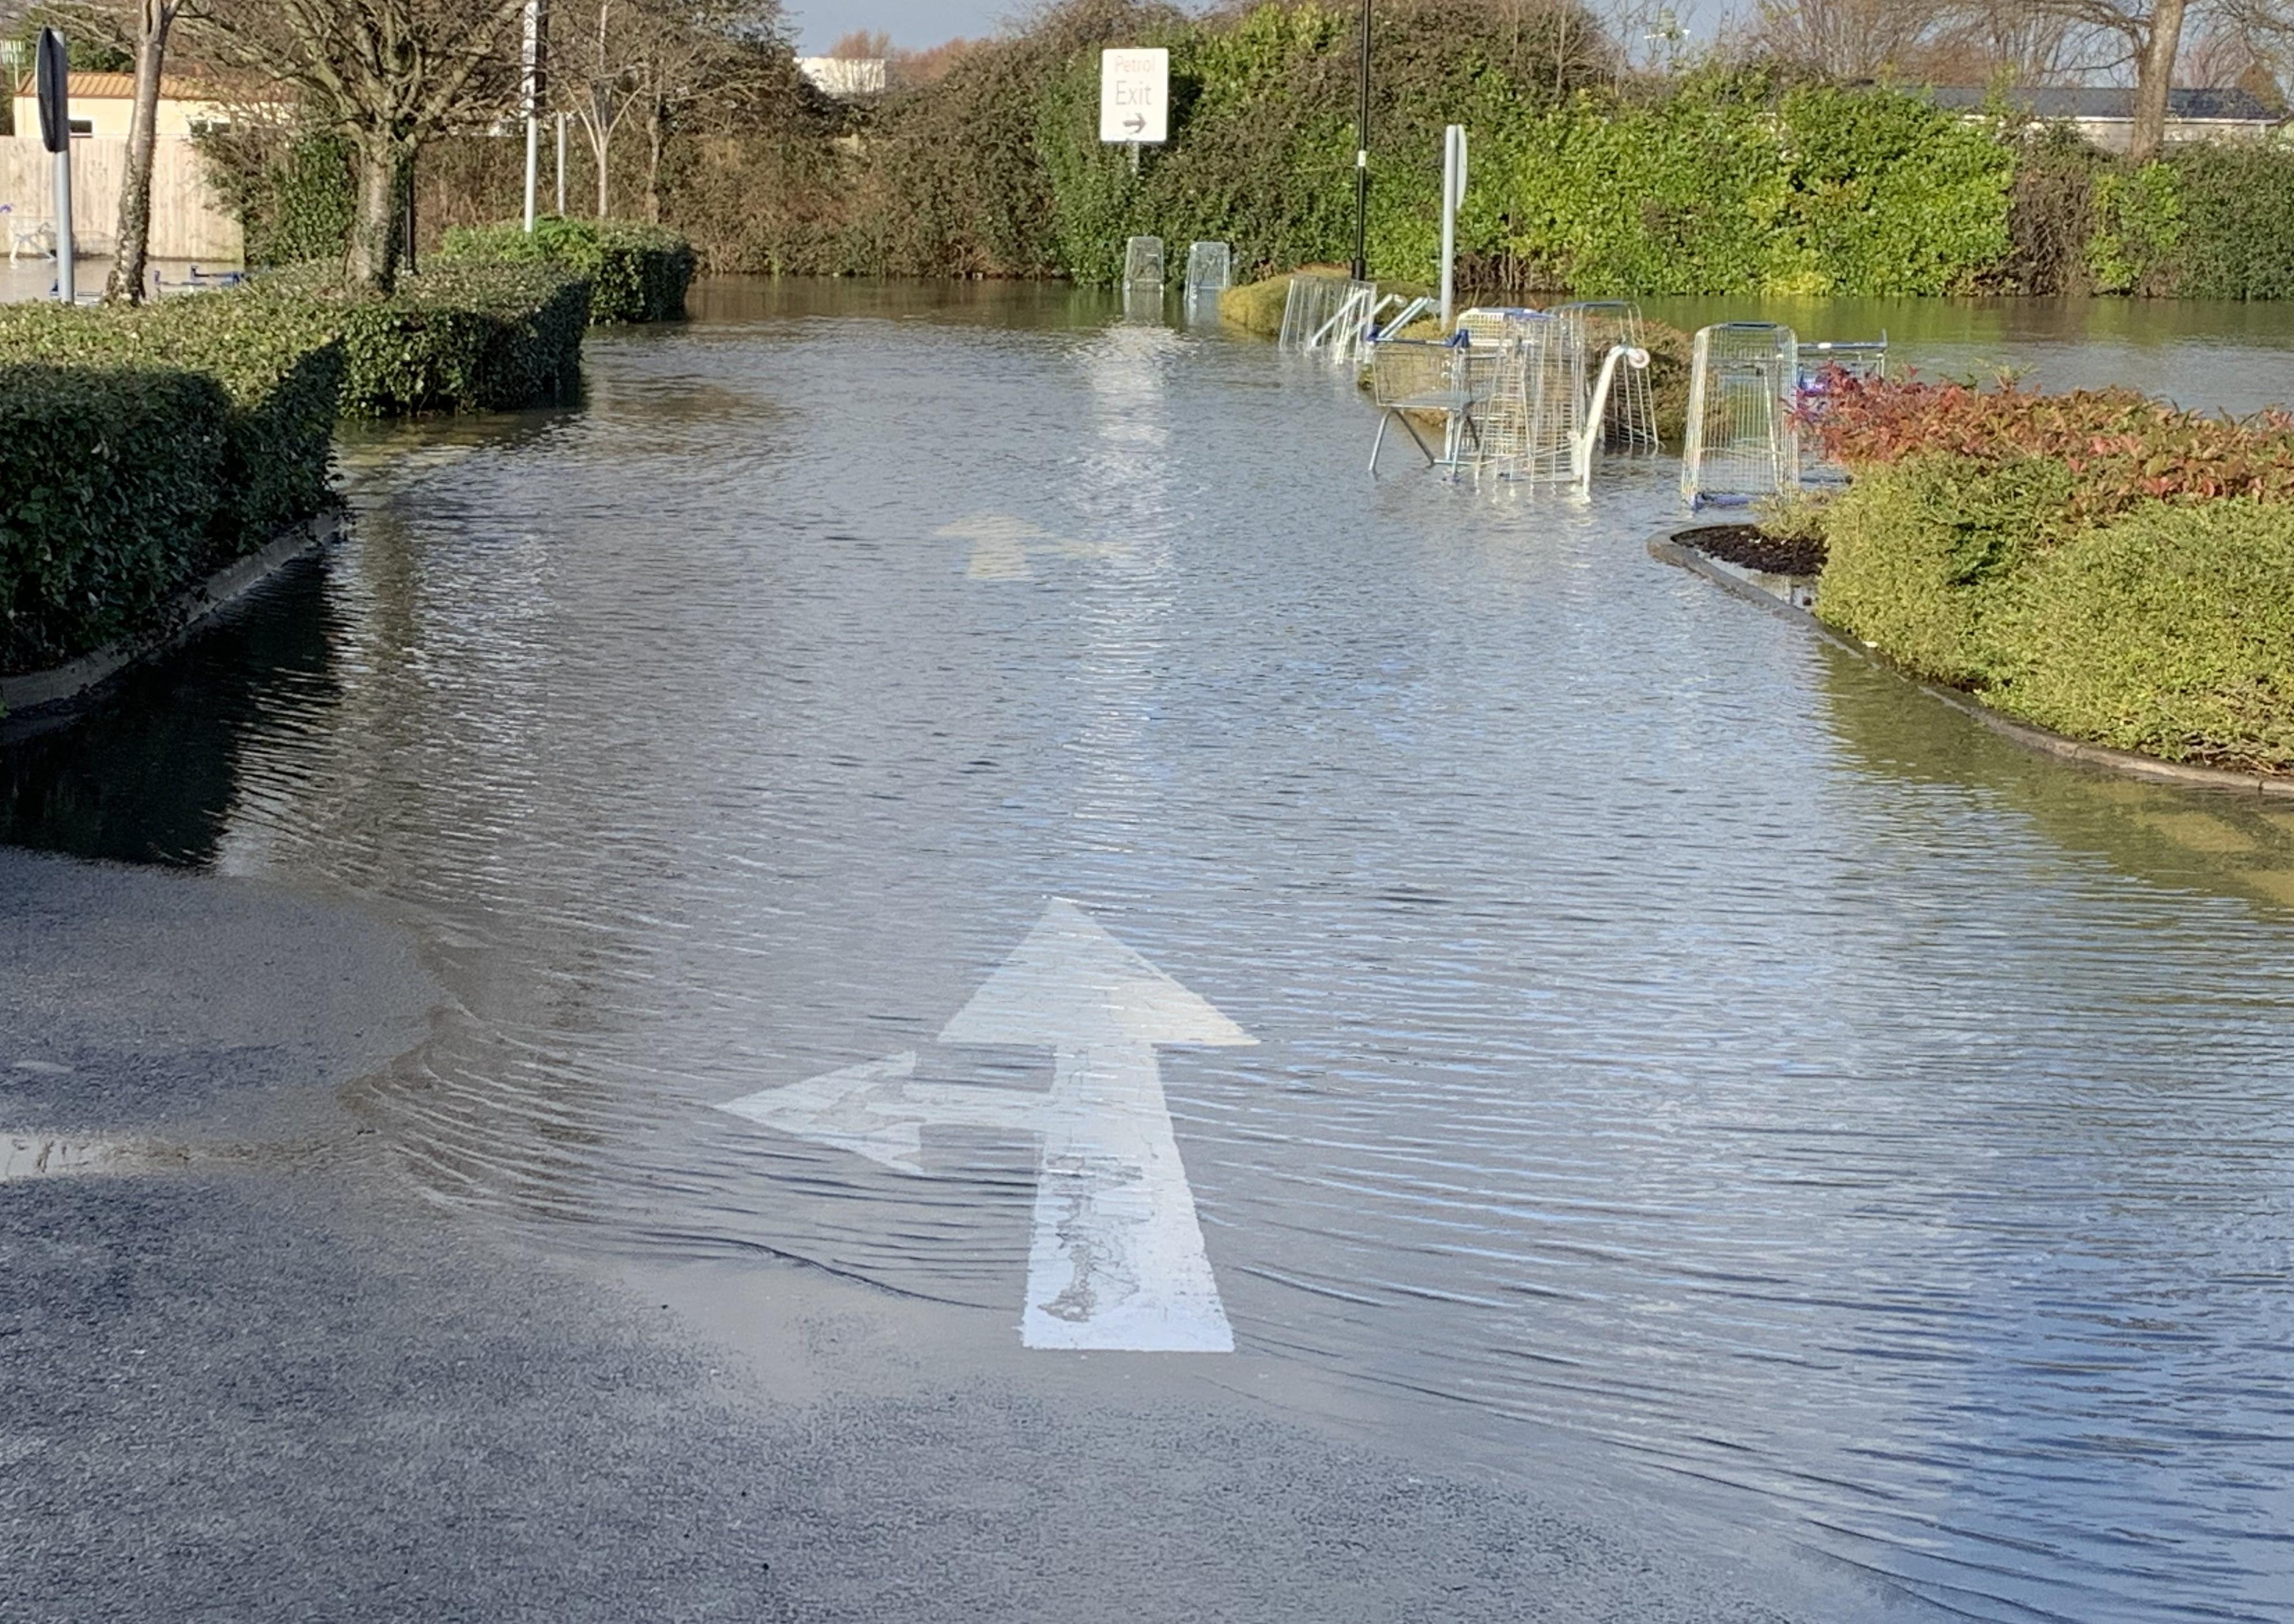 Tesco’s car park in Bognor Regis has been left under water after more flooding over the weekend. SUS-191223-143539001